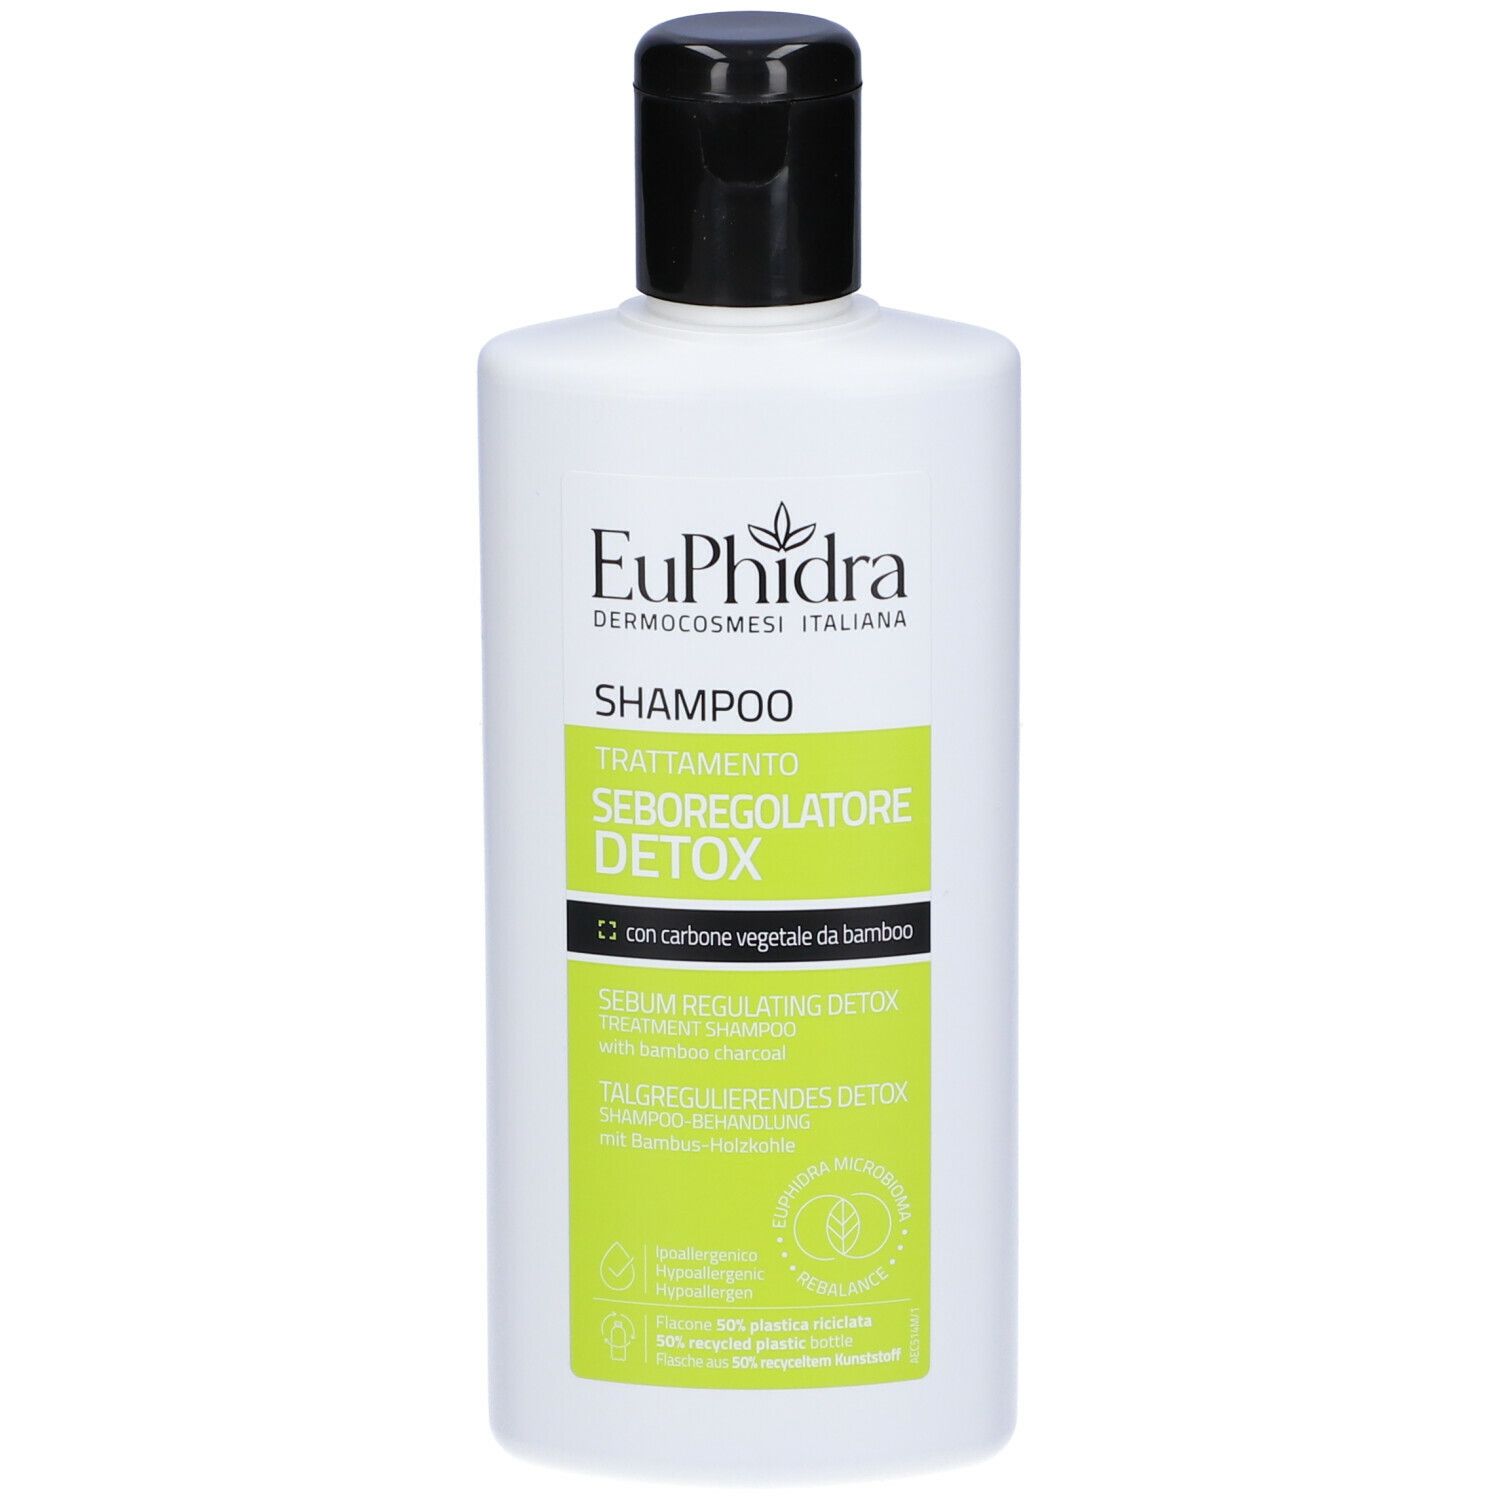 Euphidra Shampoo Seboregolatore Detox